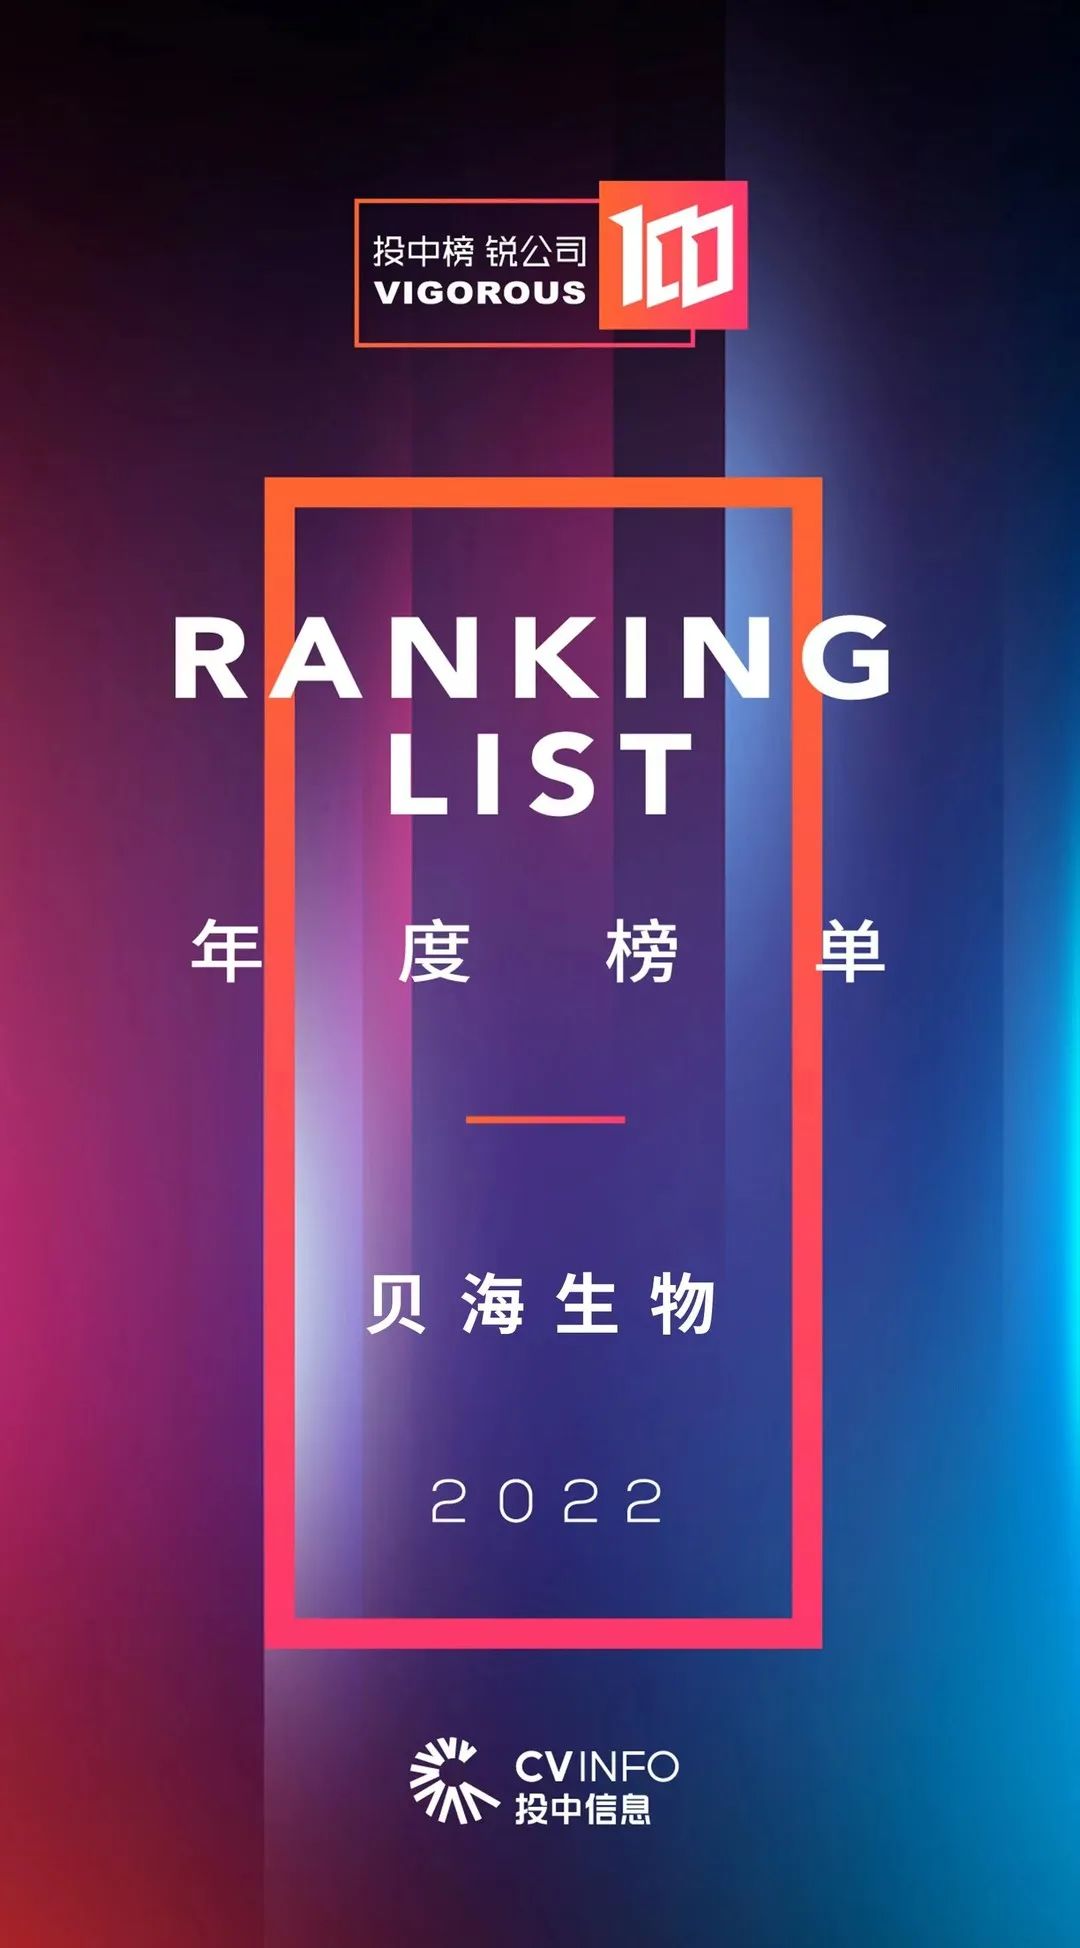 【bob电子】中国集团控股有限公司荣登“投中2022年度锐公司100榜单”